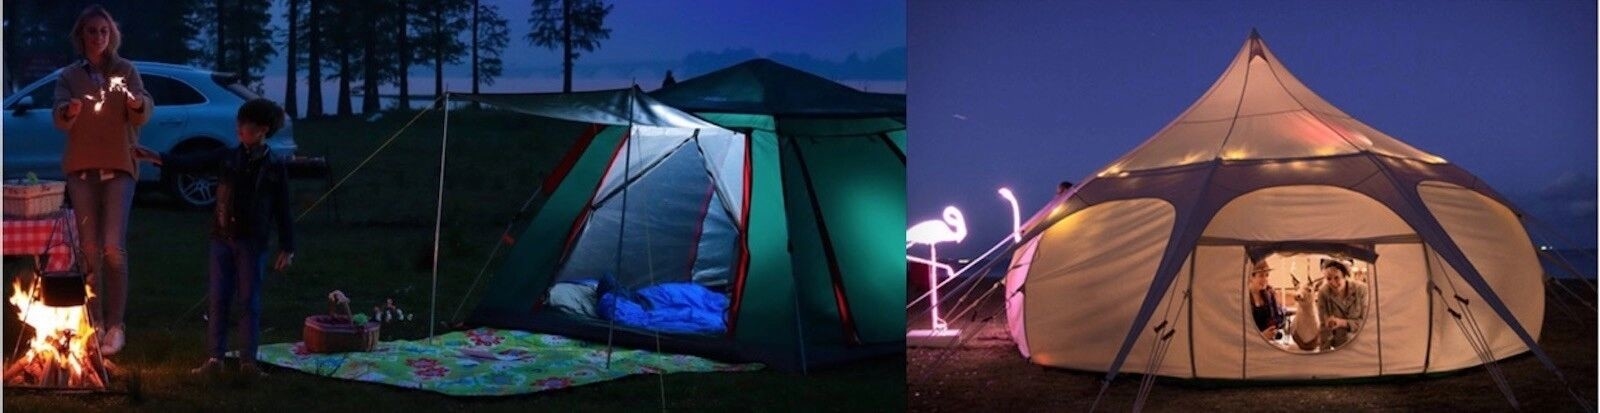 CHINA am besten Campingzelte im Freien en ventes